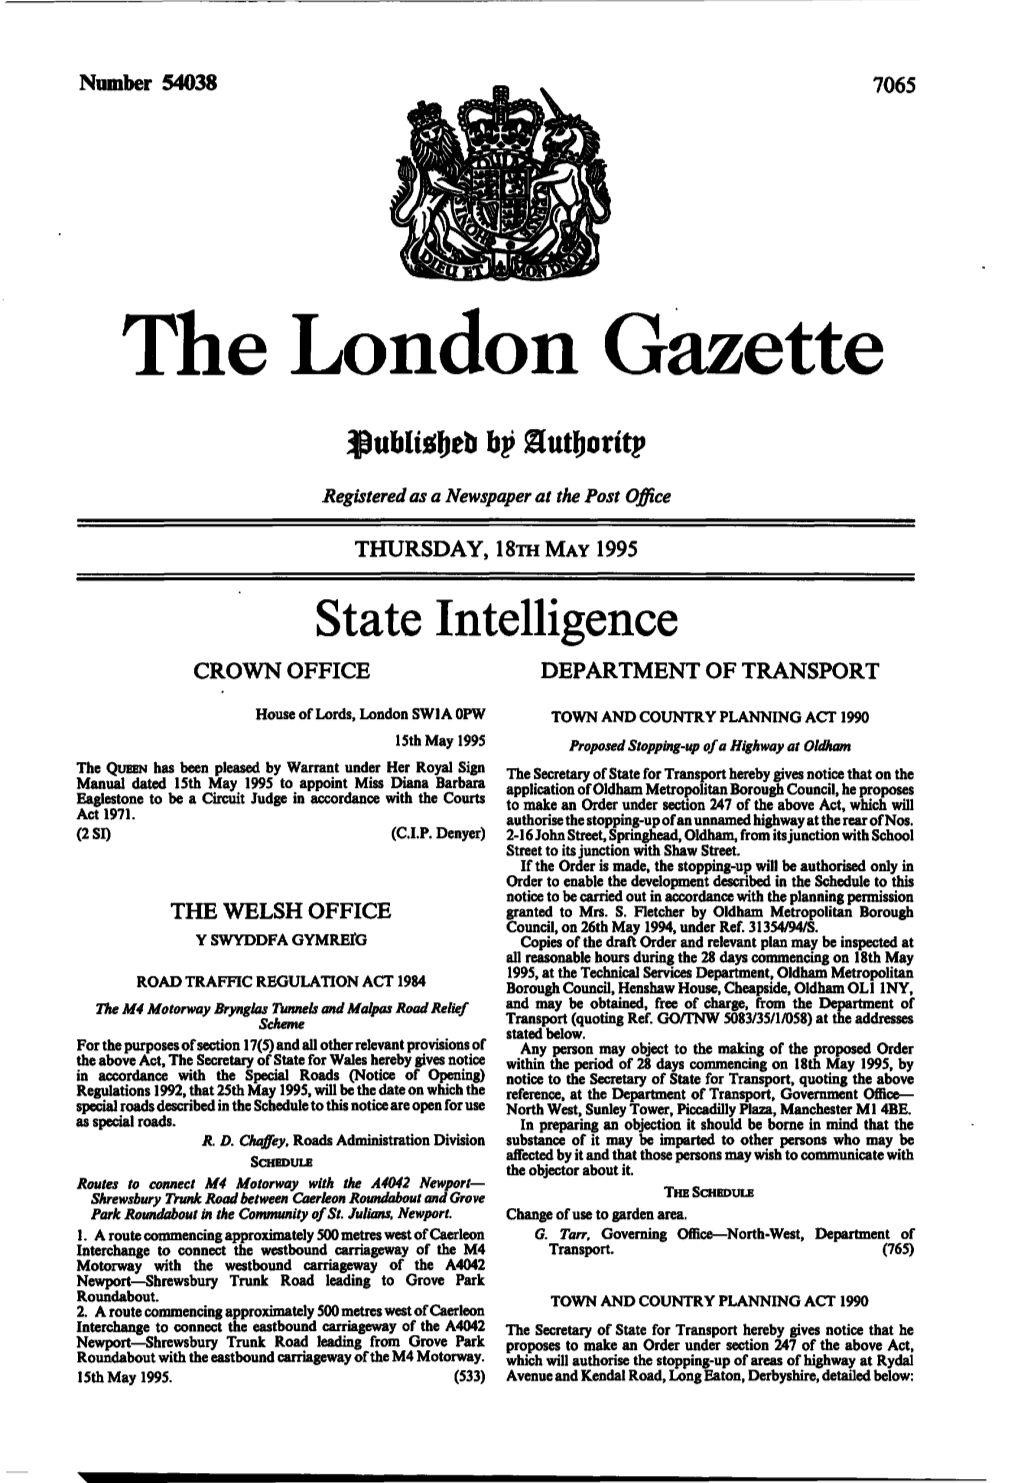 The London Gazette Bp Gjutjjorttp